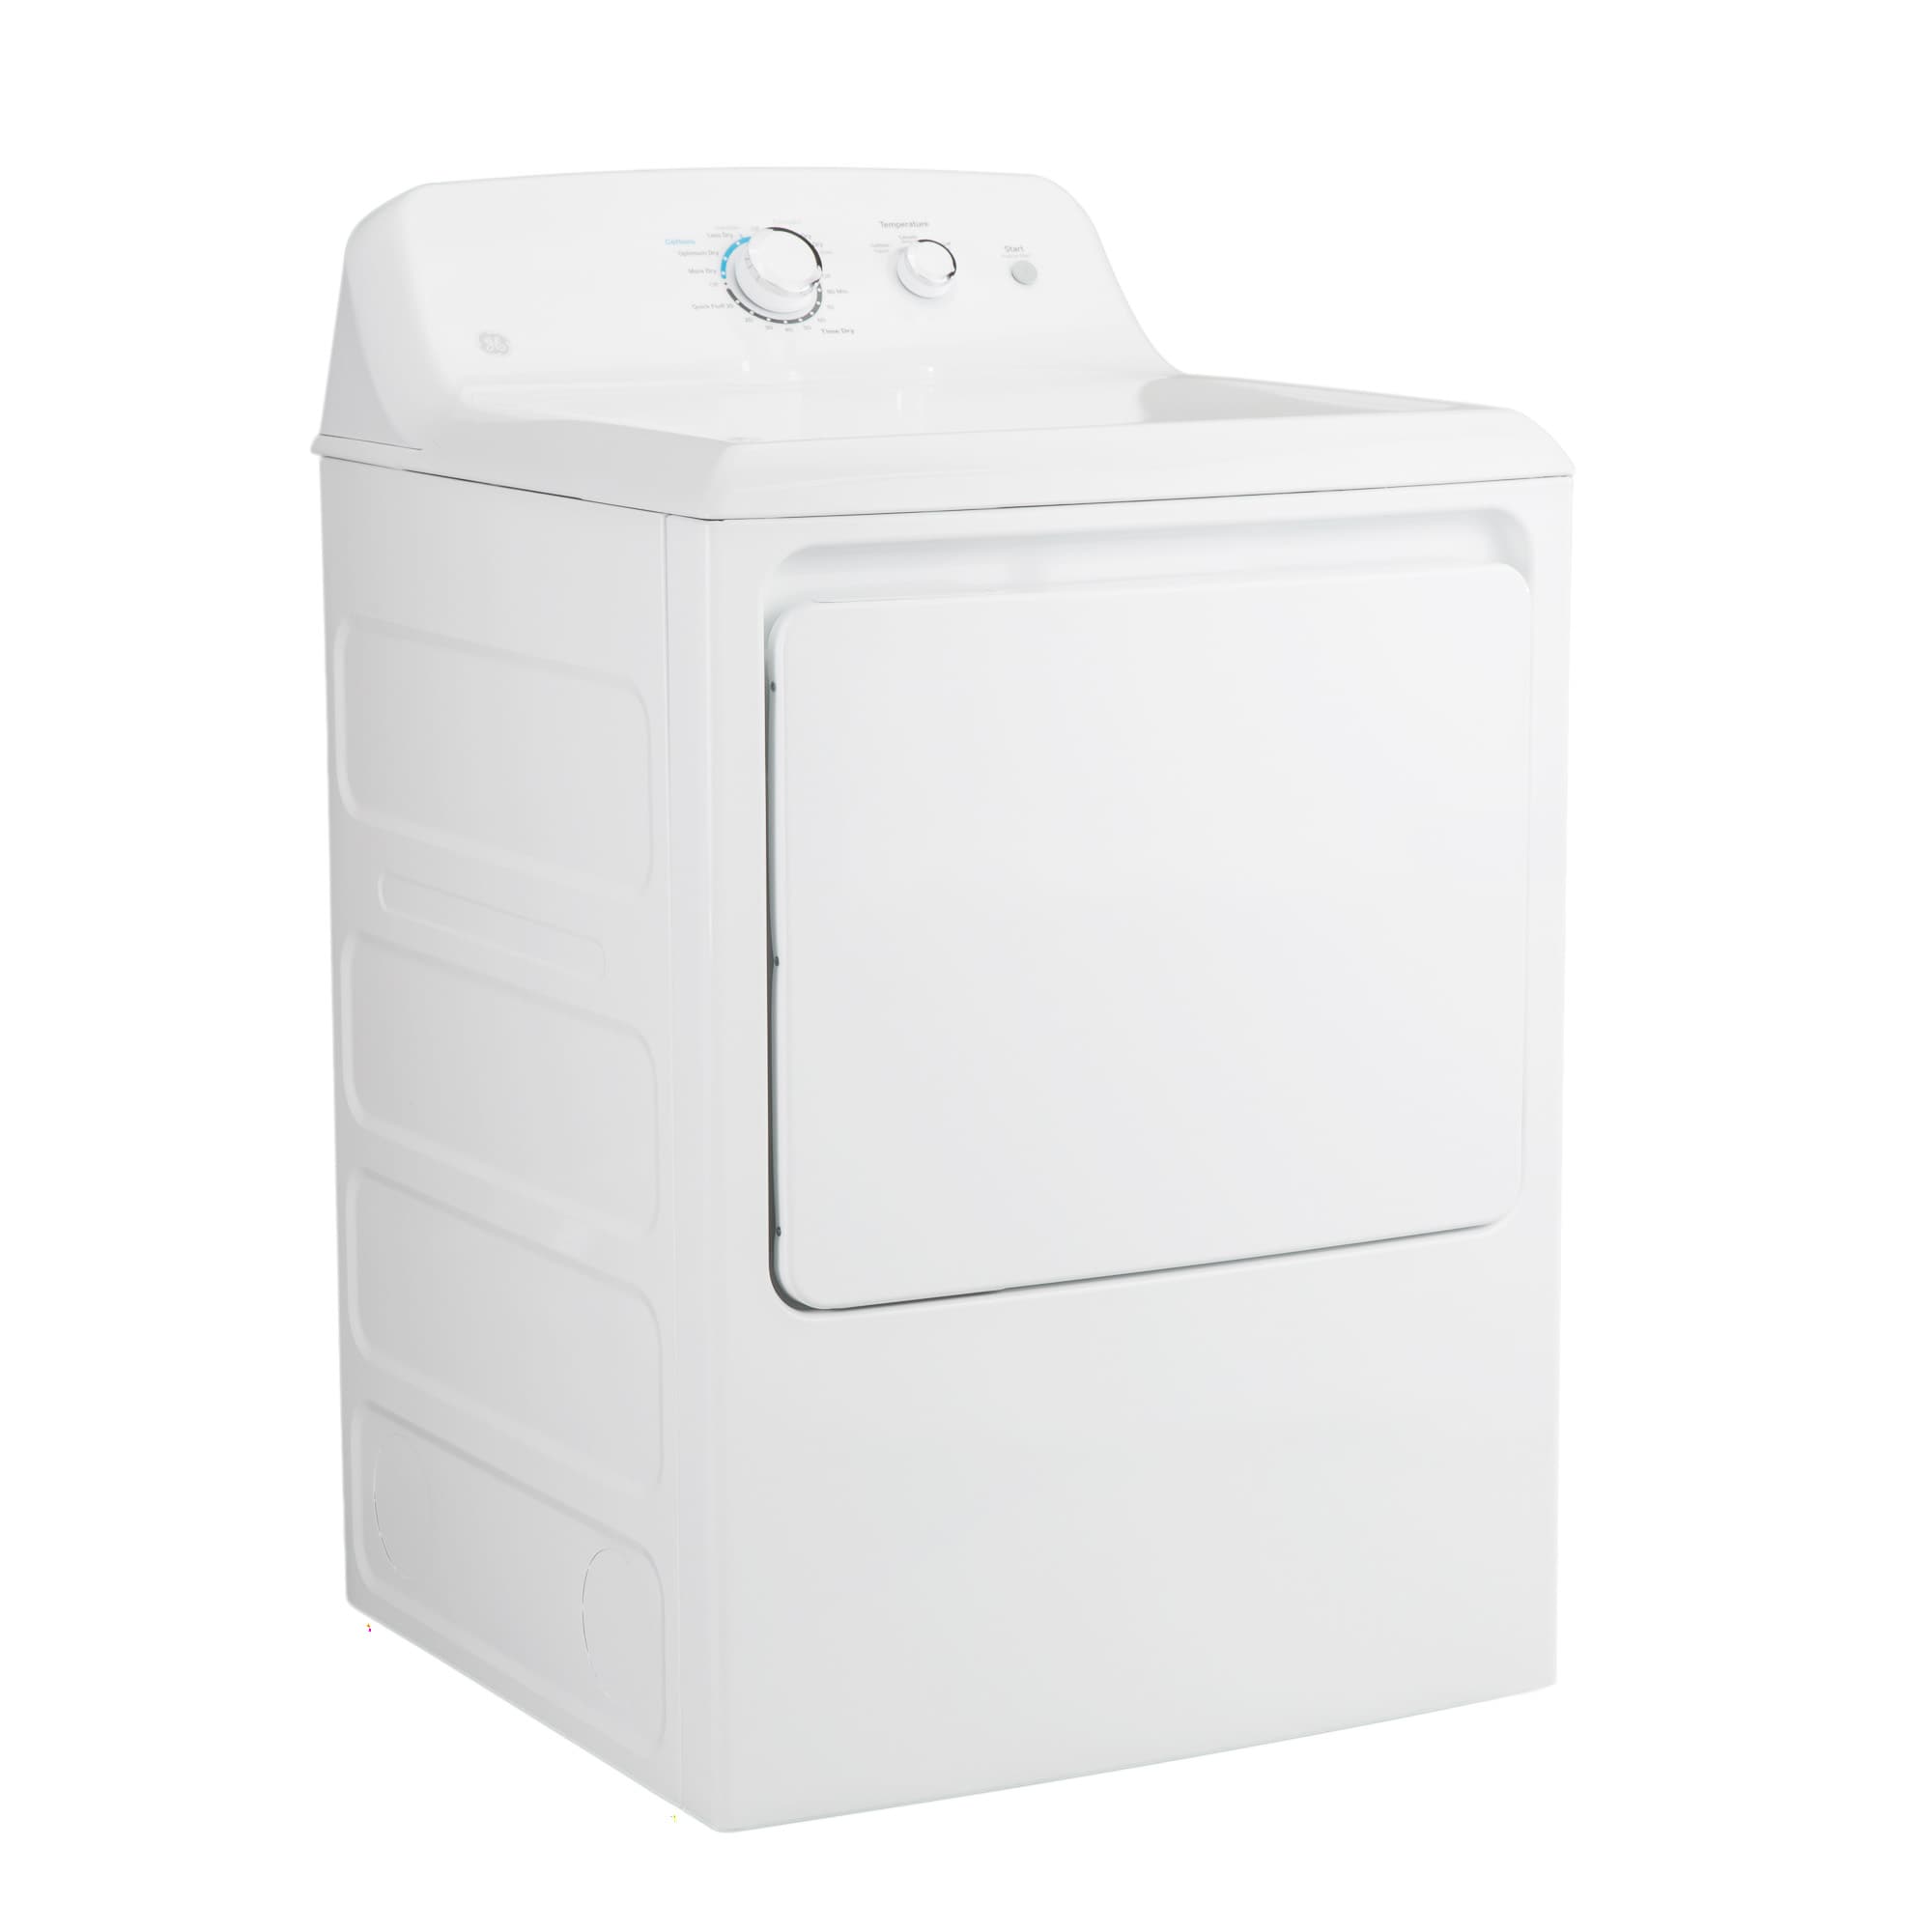 Catálogo de fabricantes de Apartments Size Washer Dryer de alta